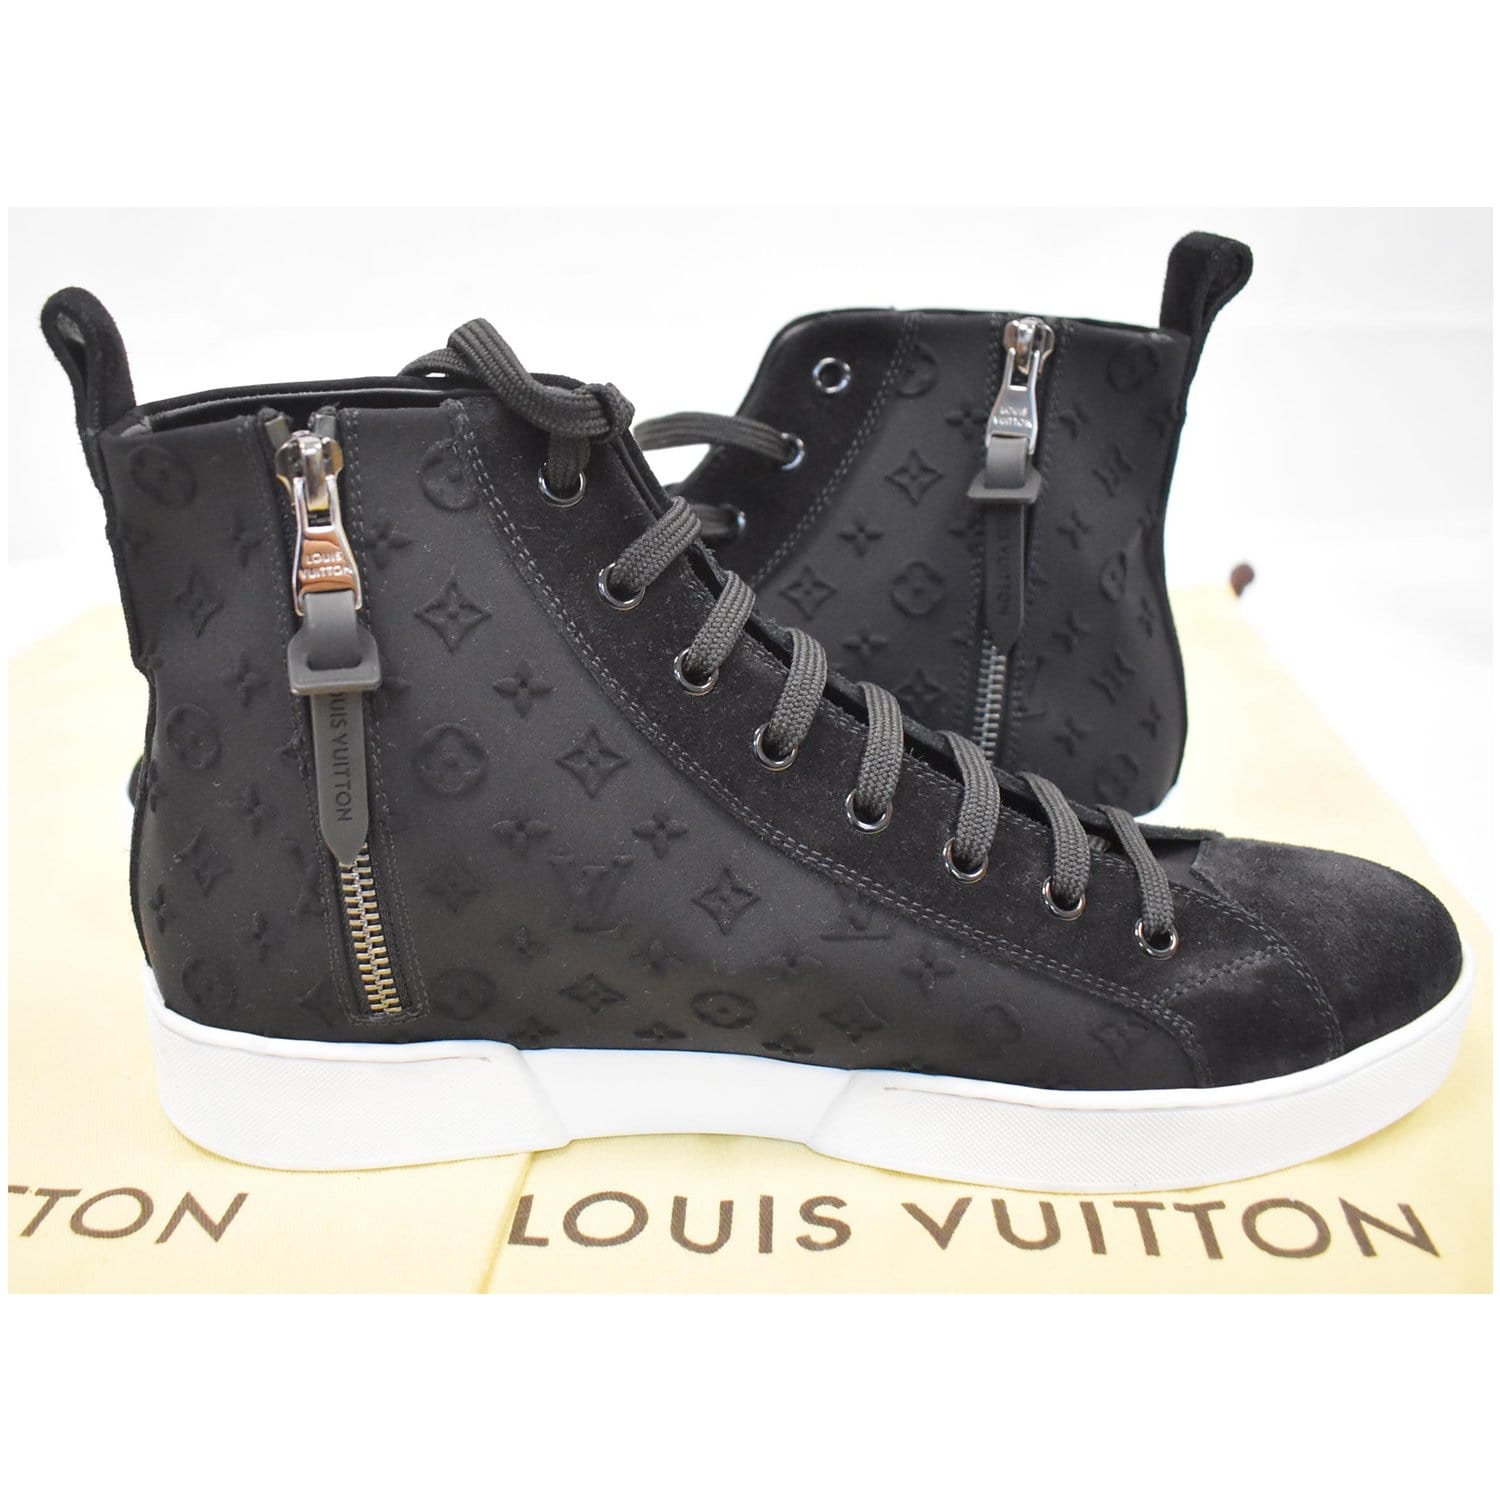 Louis Vuitton, Shoes, Authentic Louis Vuitton High Top Sneakers